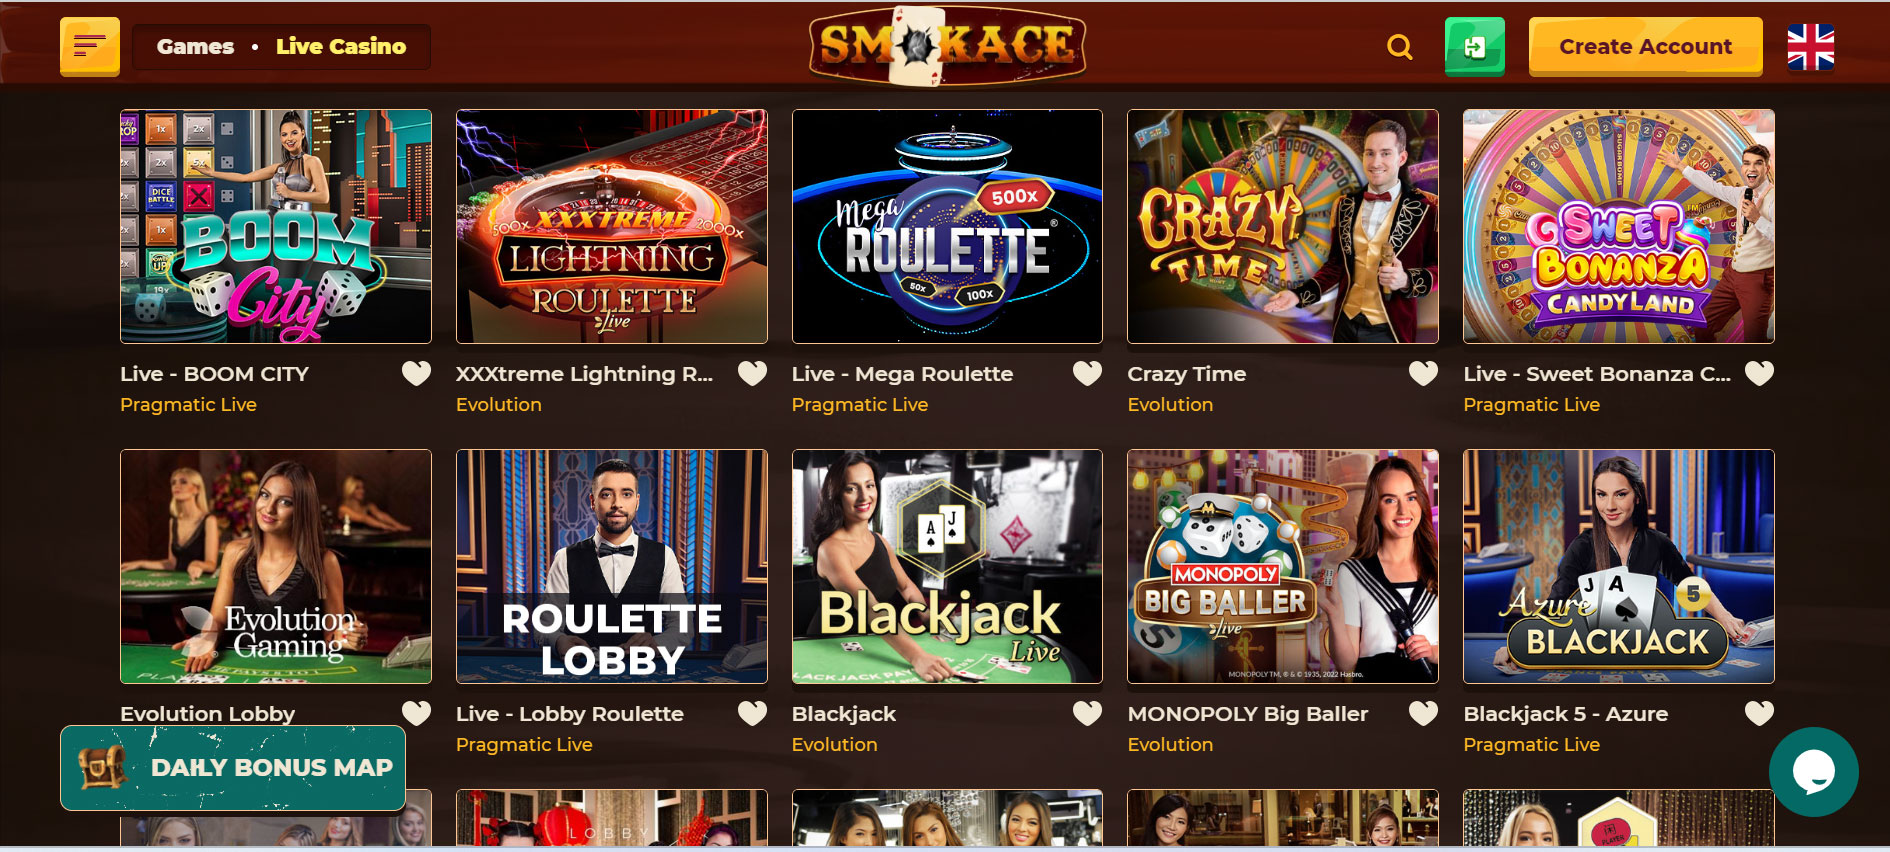 SmokeAce Casino Live Casino